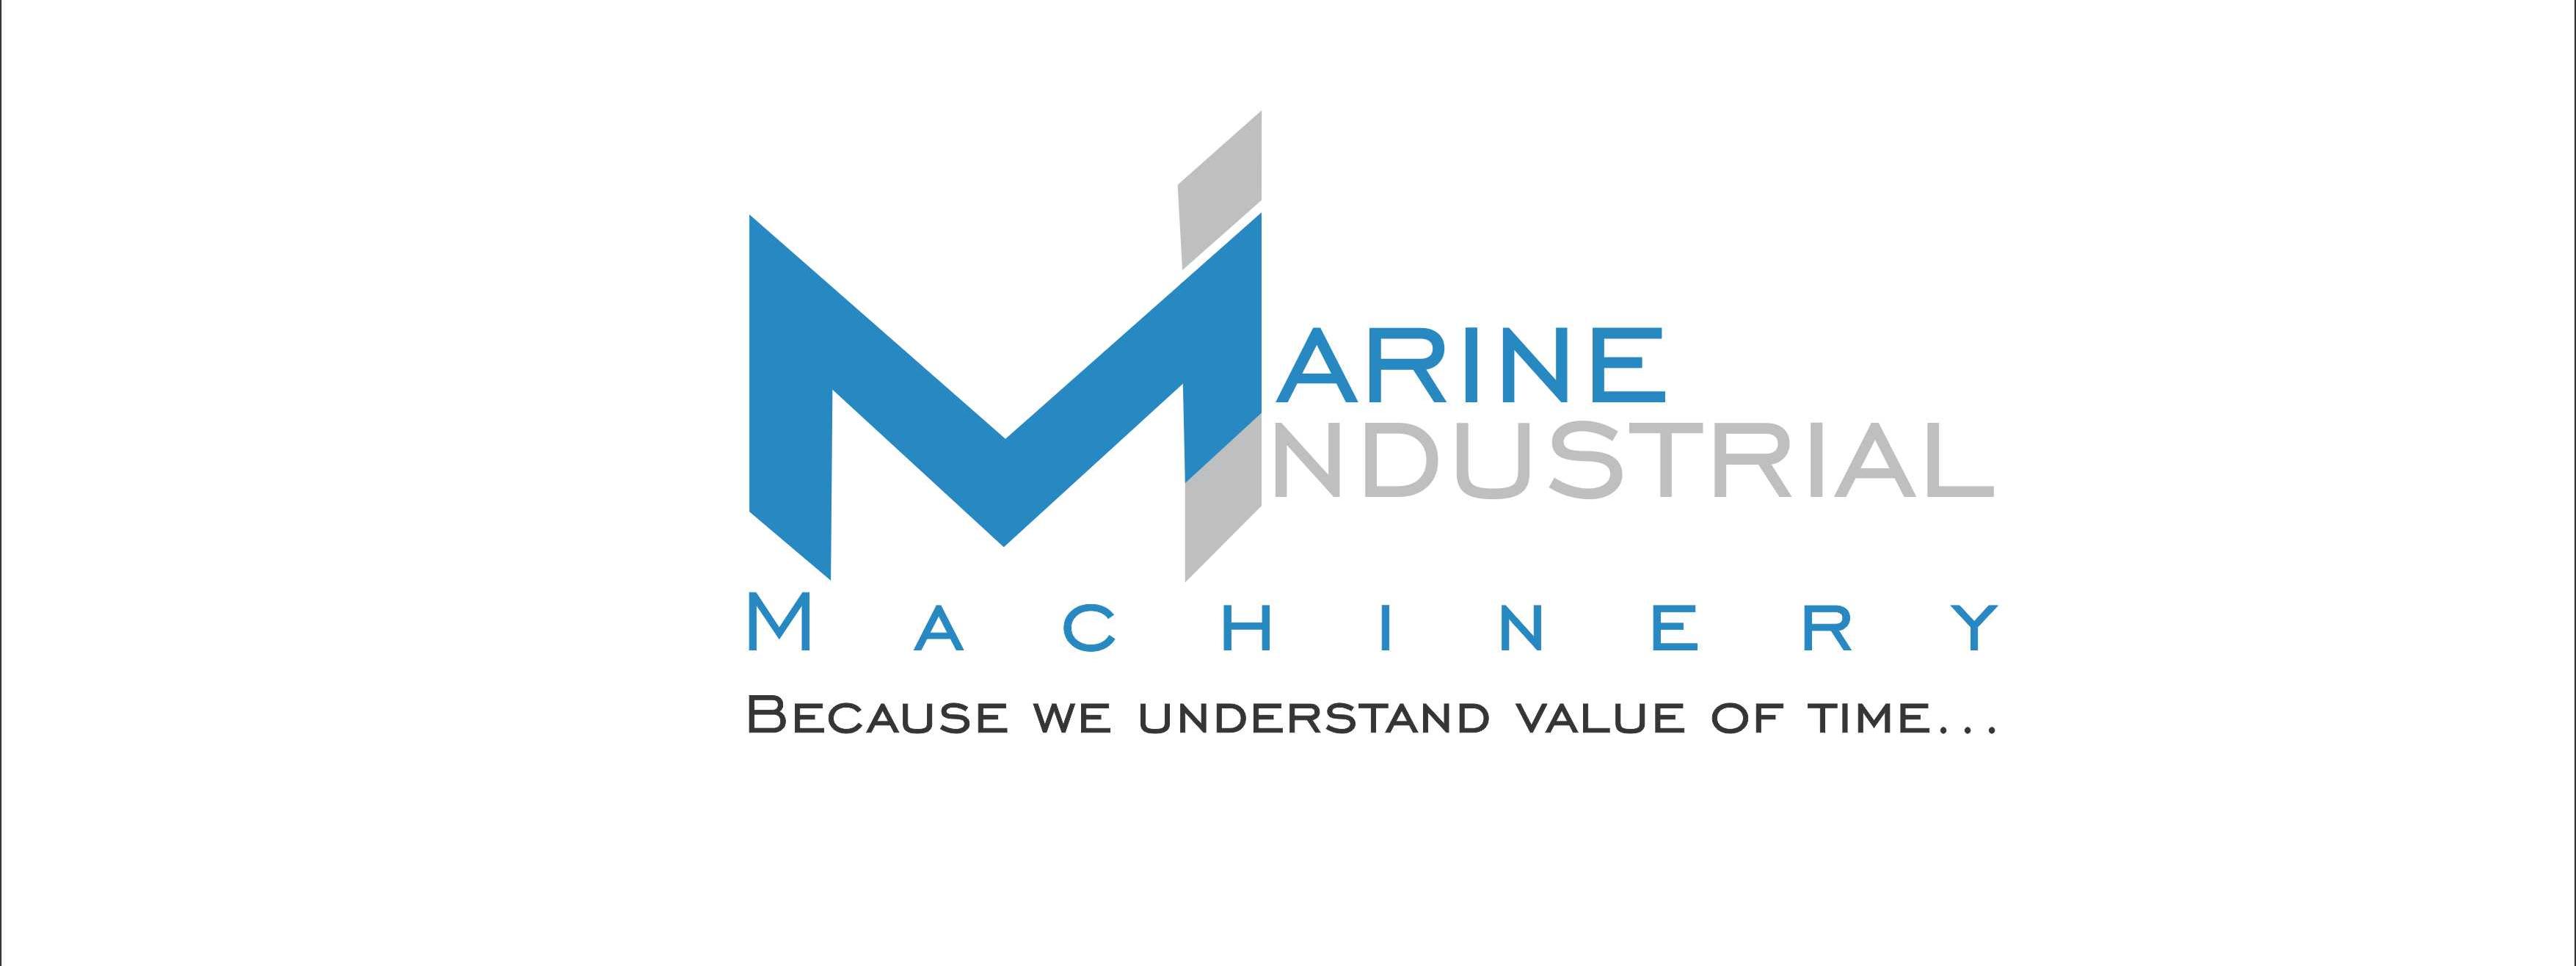 Marine Industrial Machinery